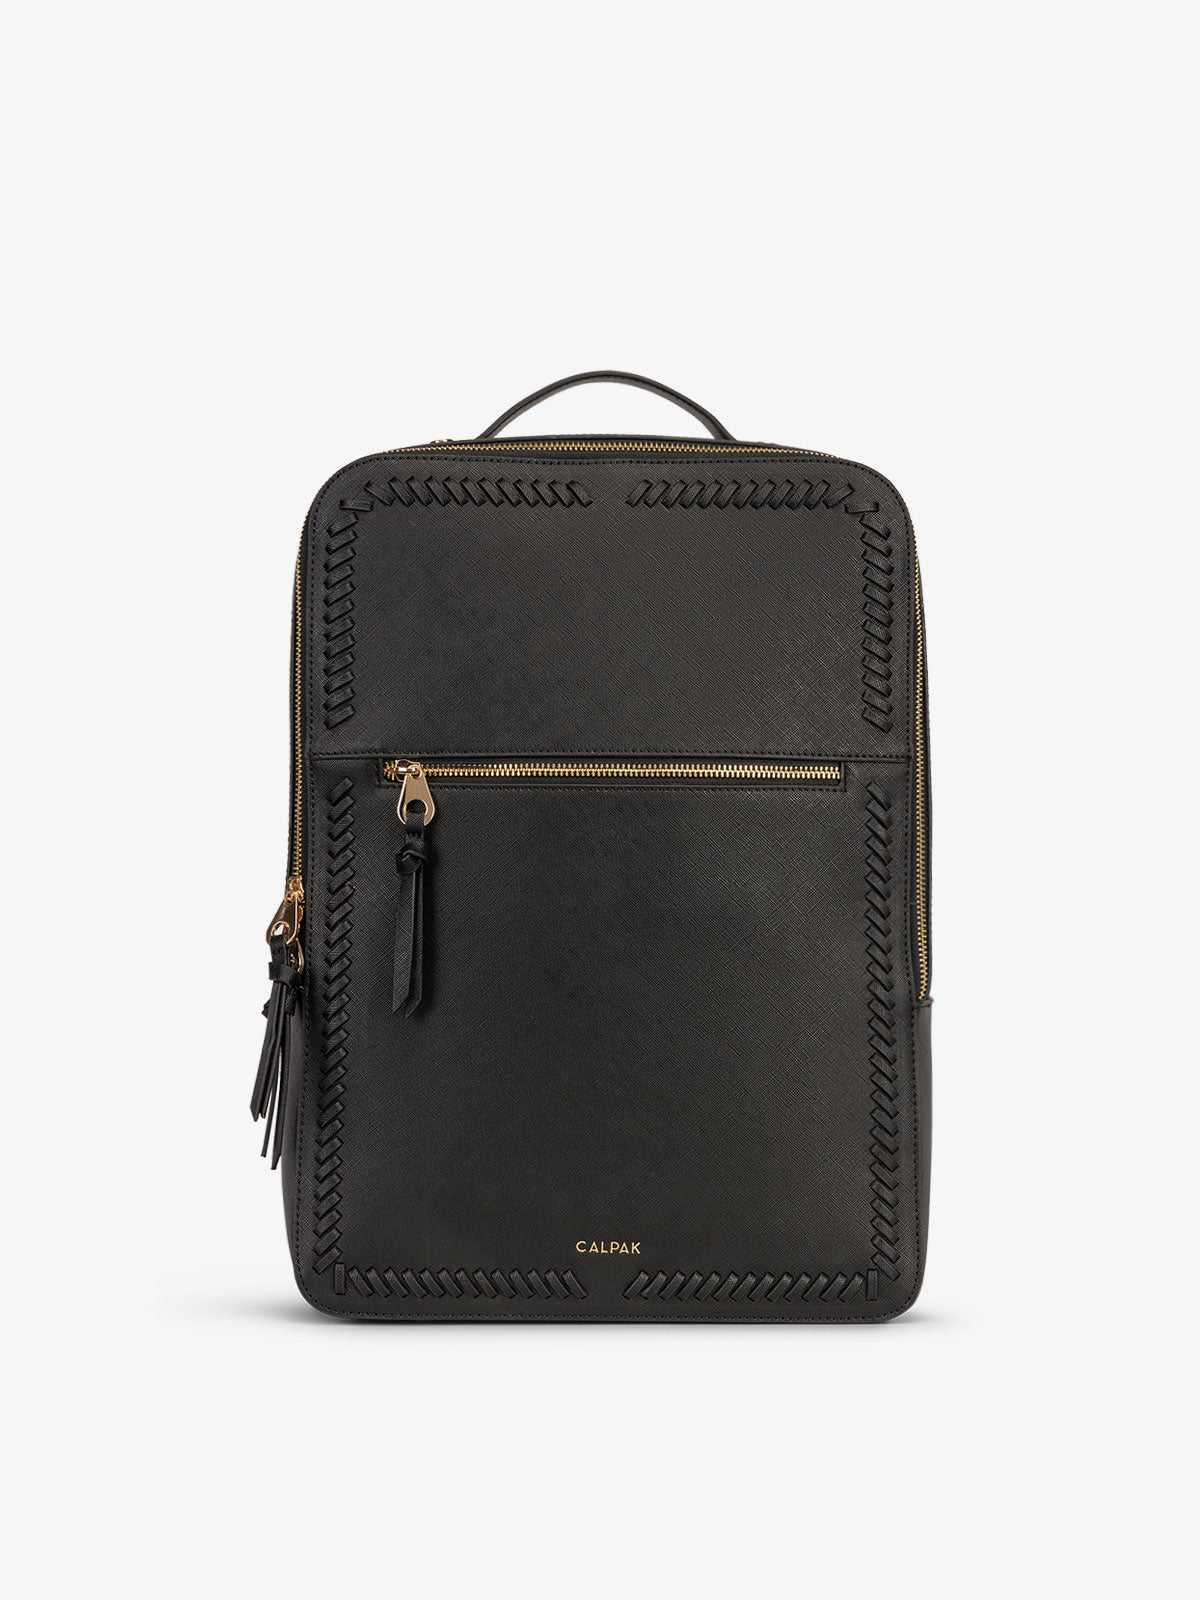 Kaya 17 inch Laptop Backpack | CALPAK